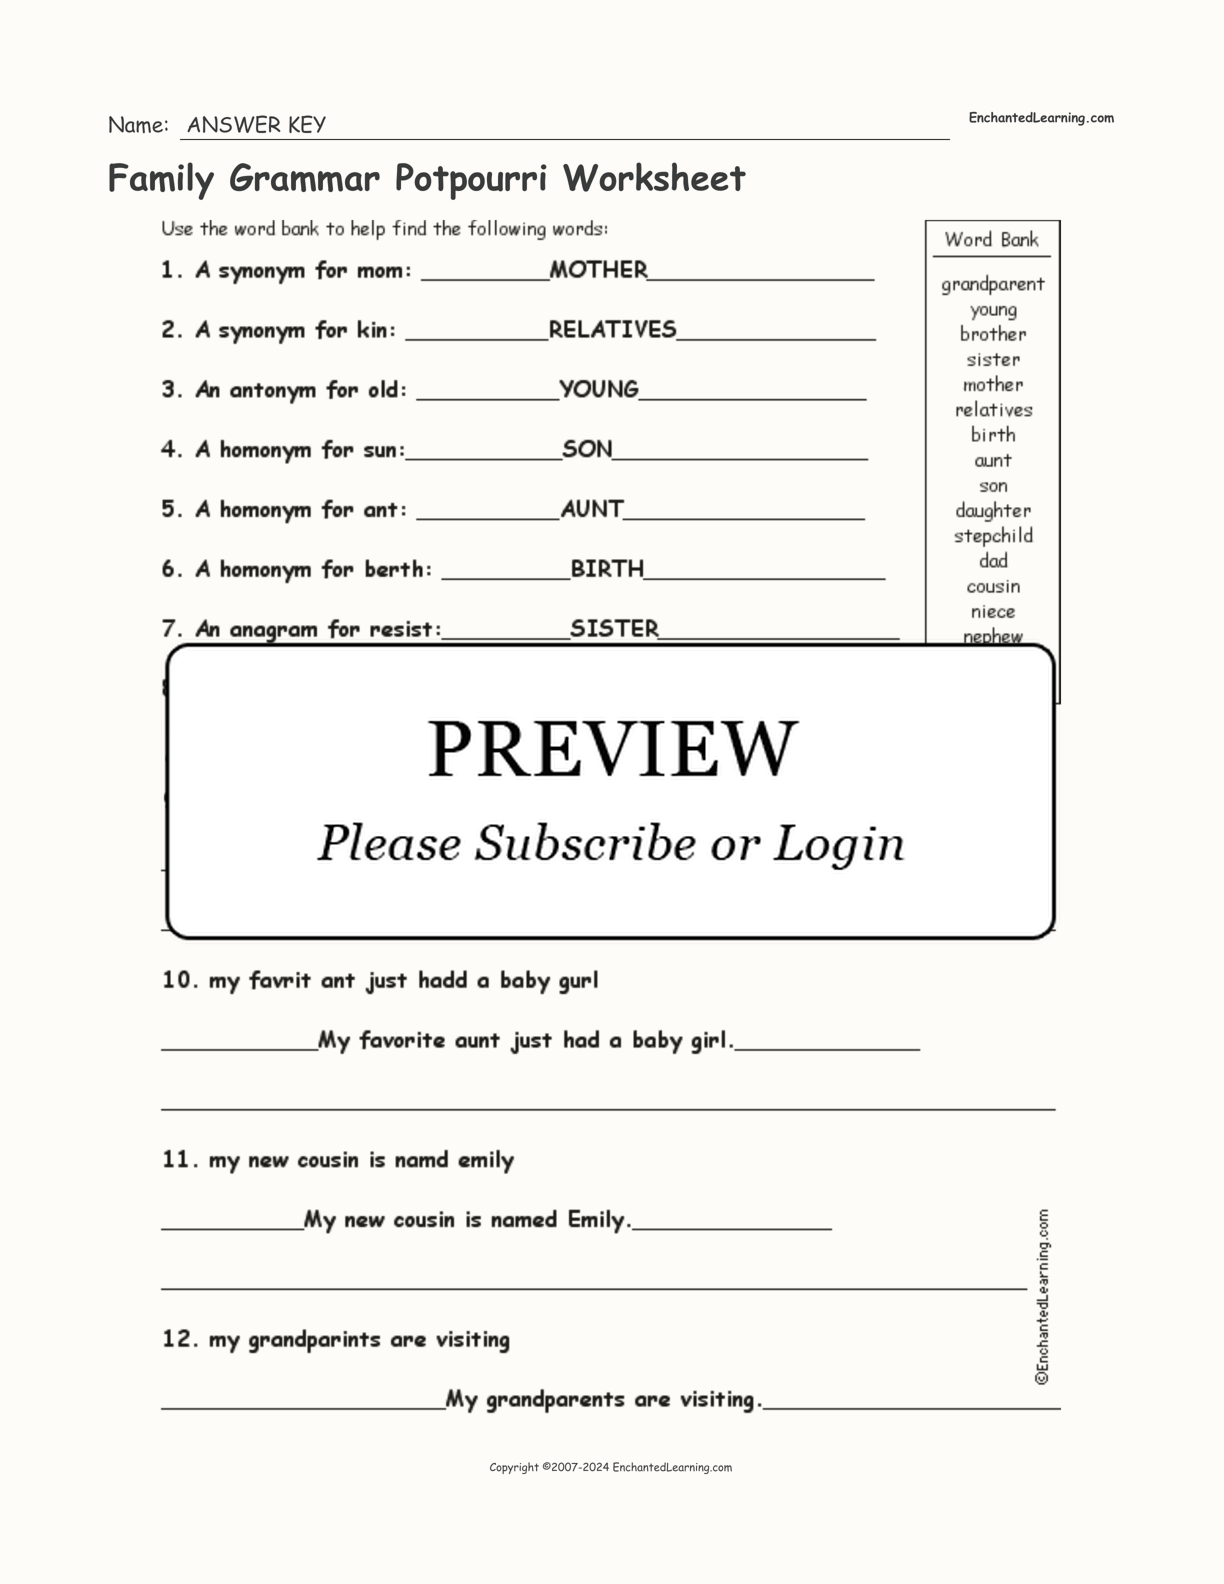 Family Grammar Potpourri Worksheet interactive worksheet page 2